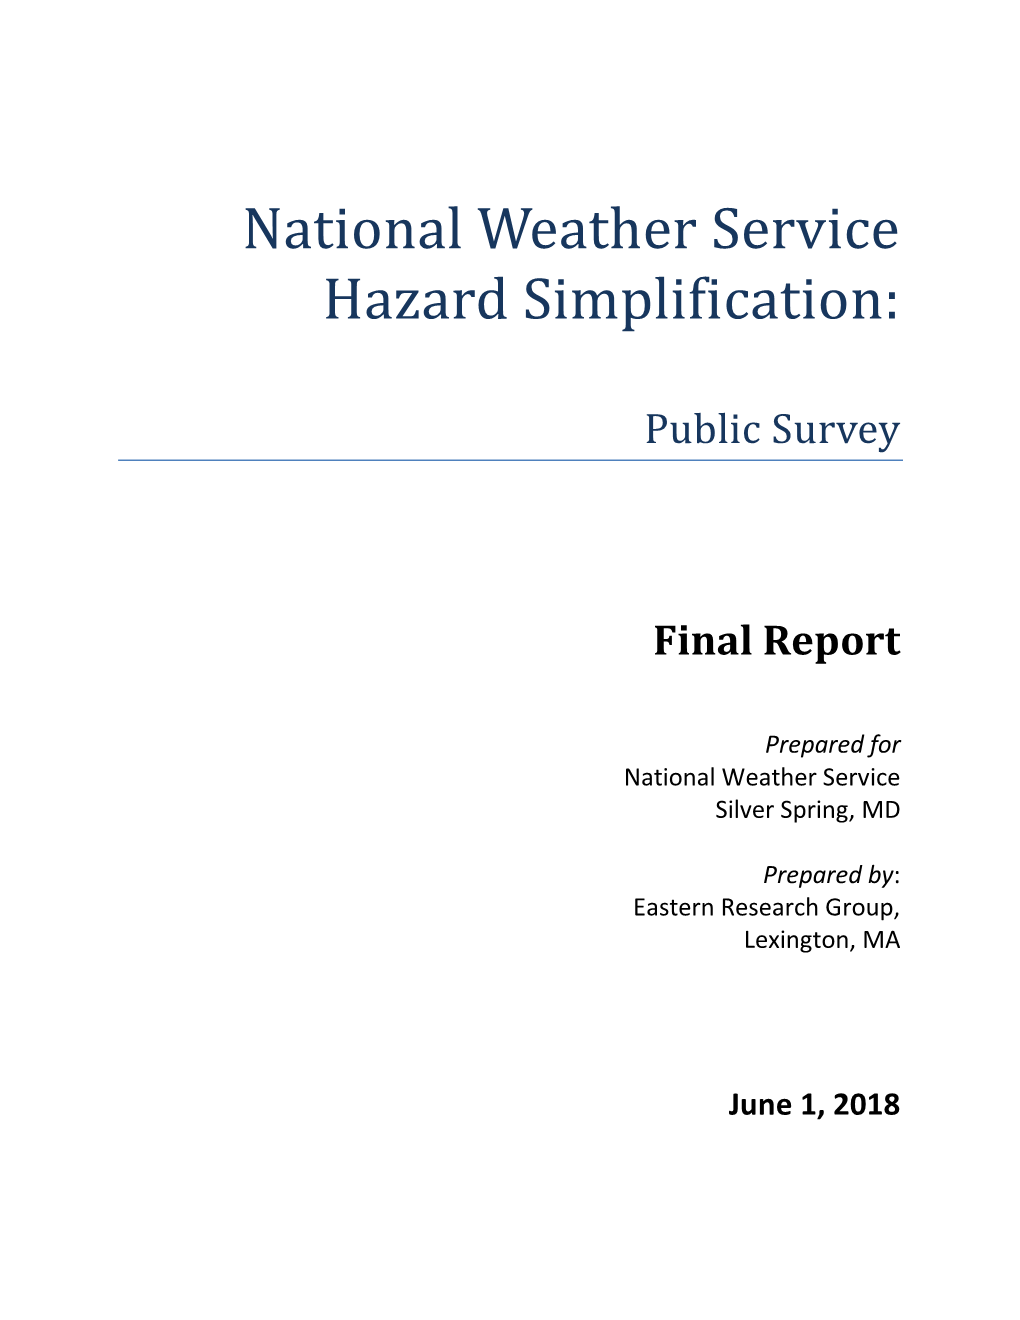 National Weather Service Hazard Simplification